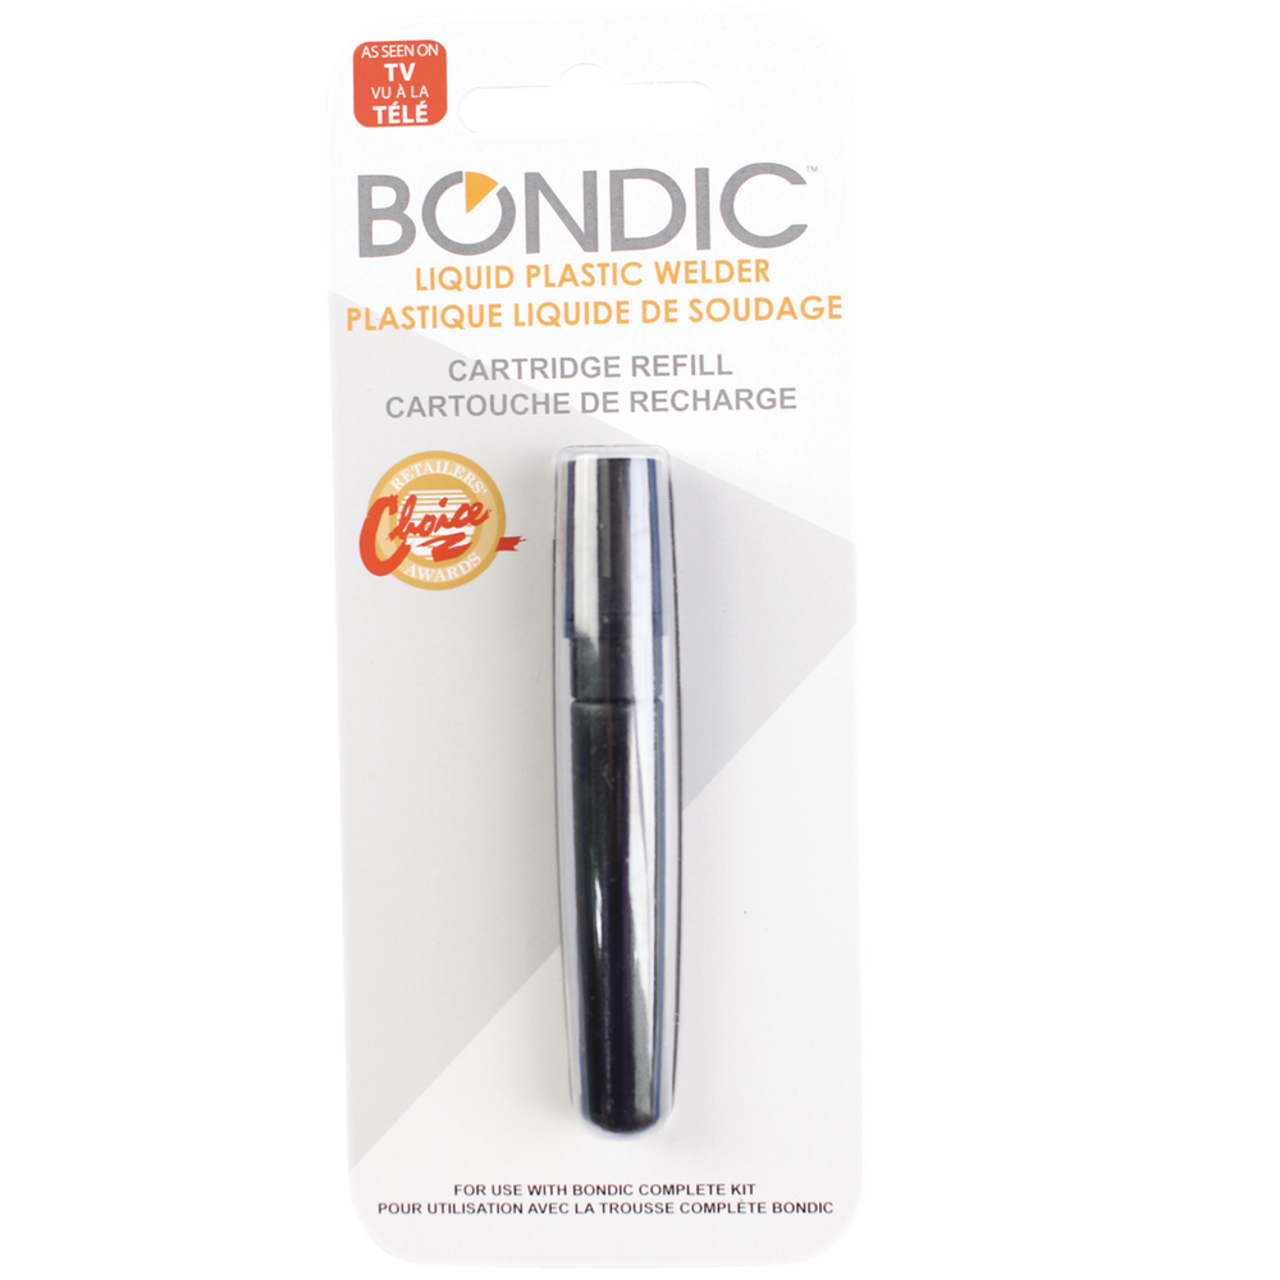 Bondic Online Store South Africa